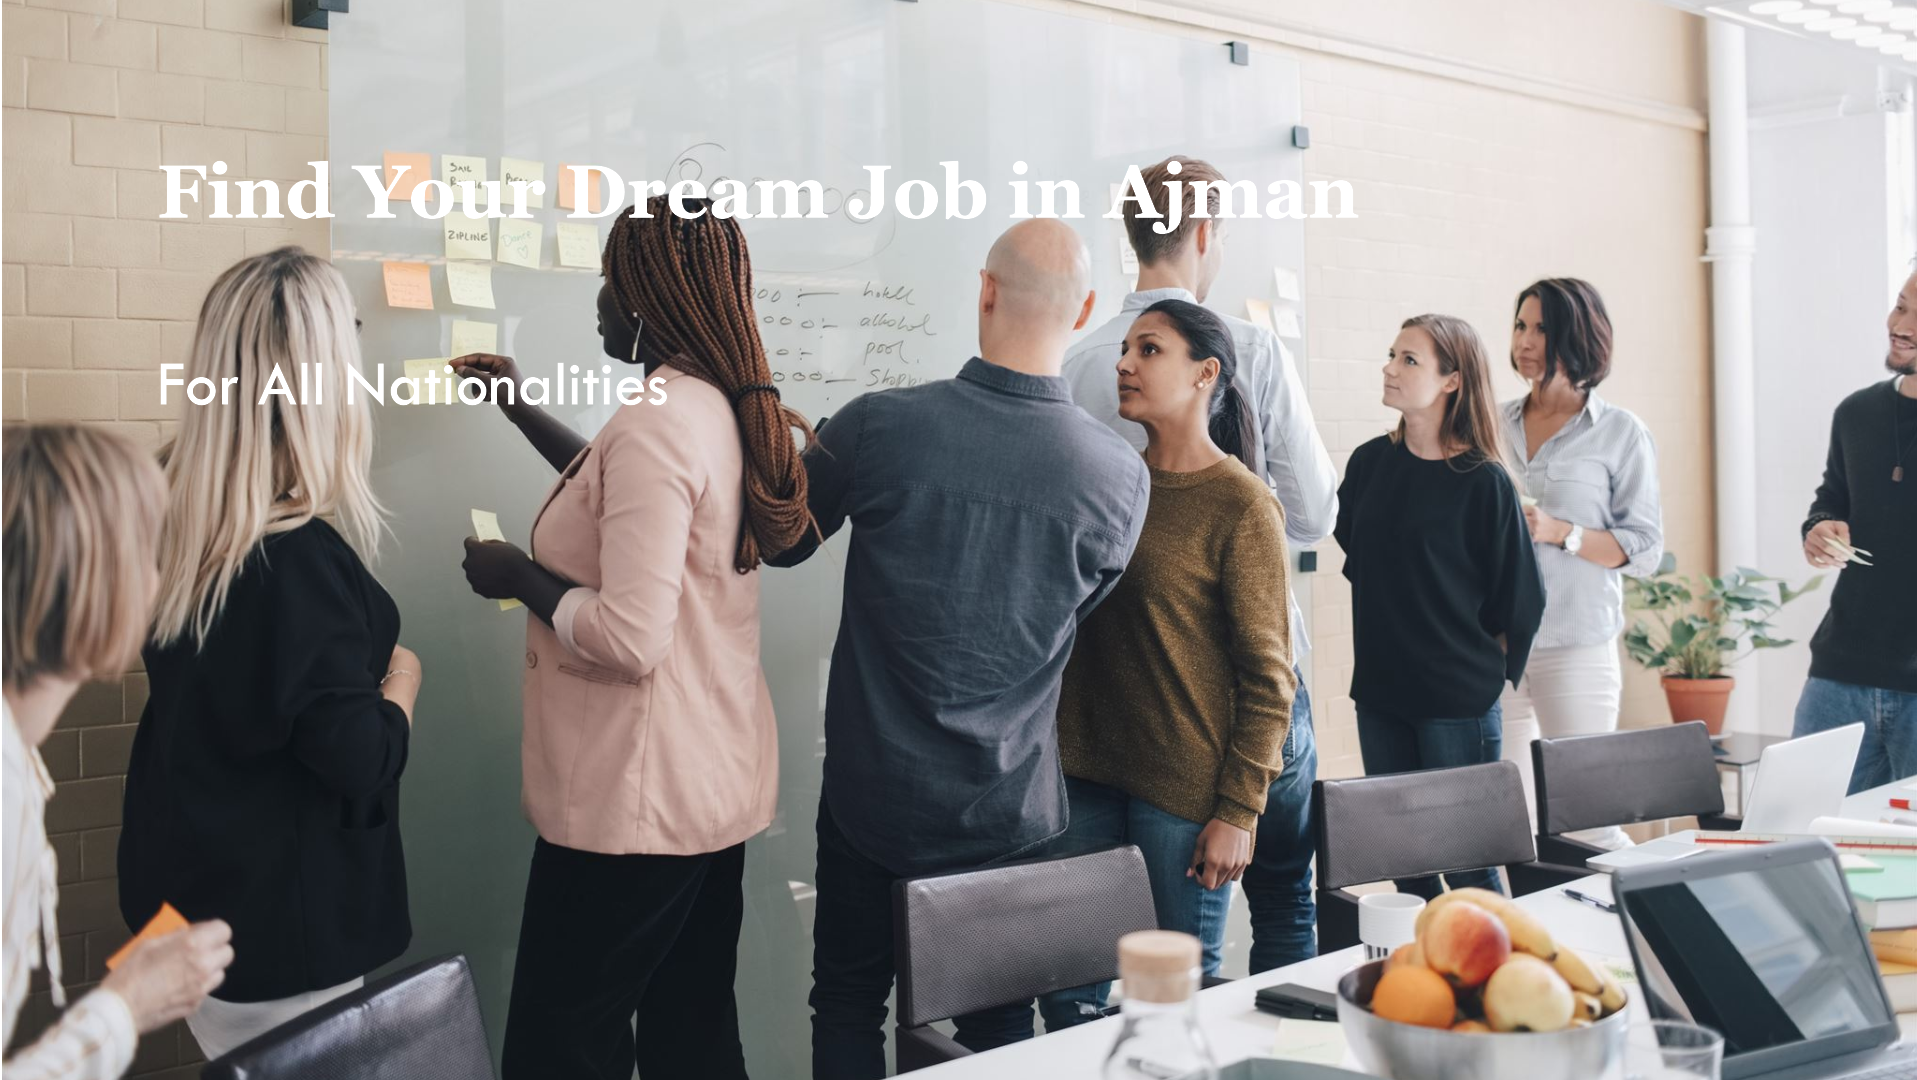 ajman jobs for all nationalities